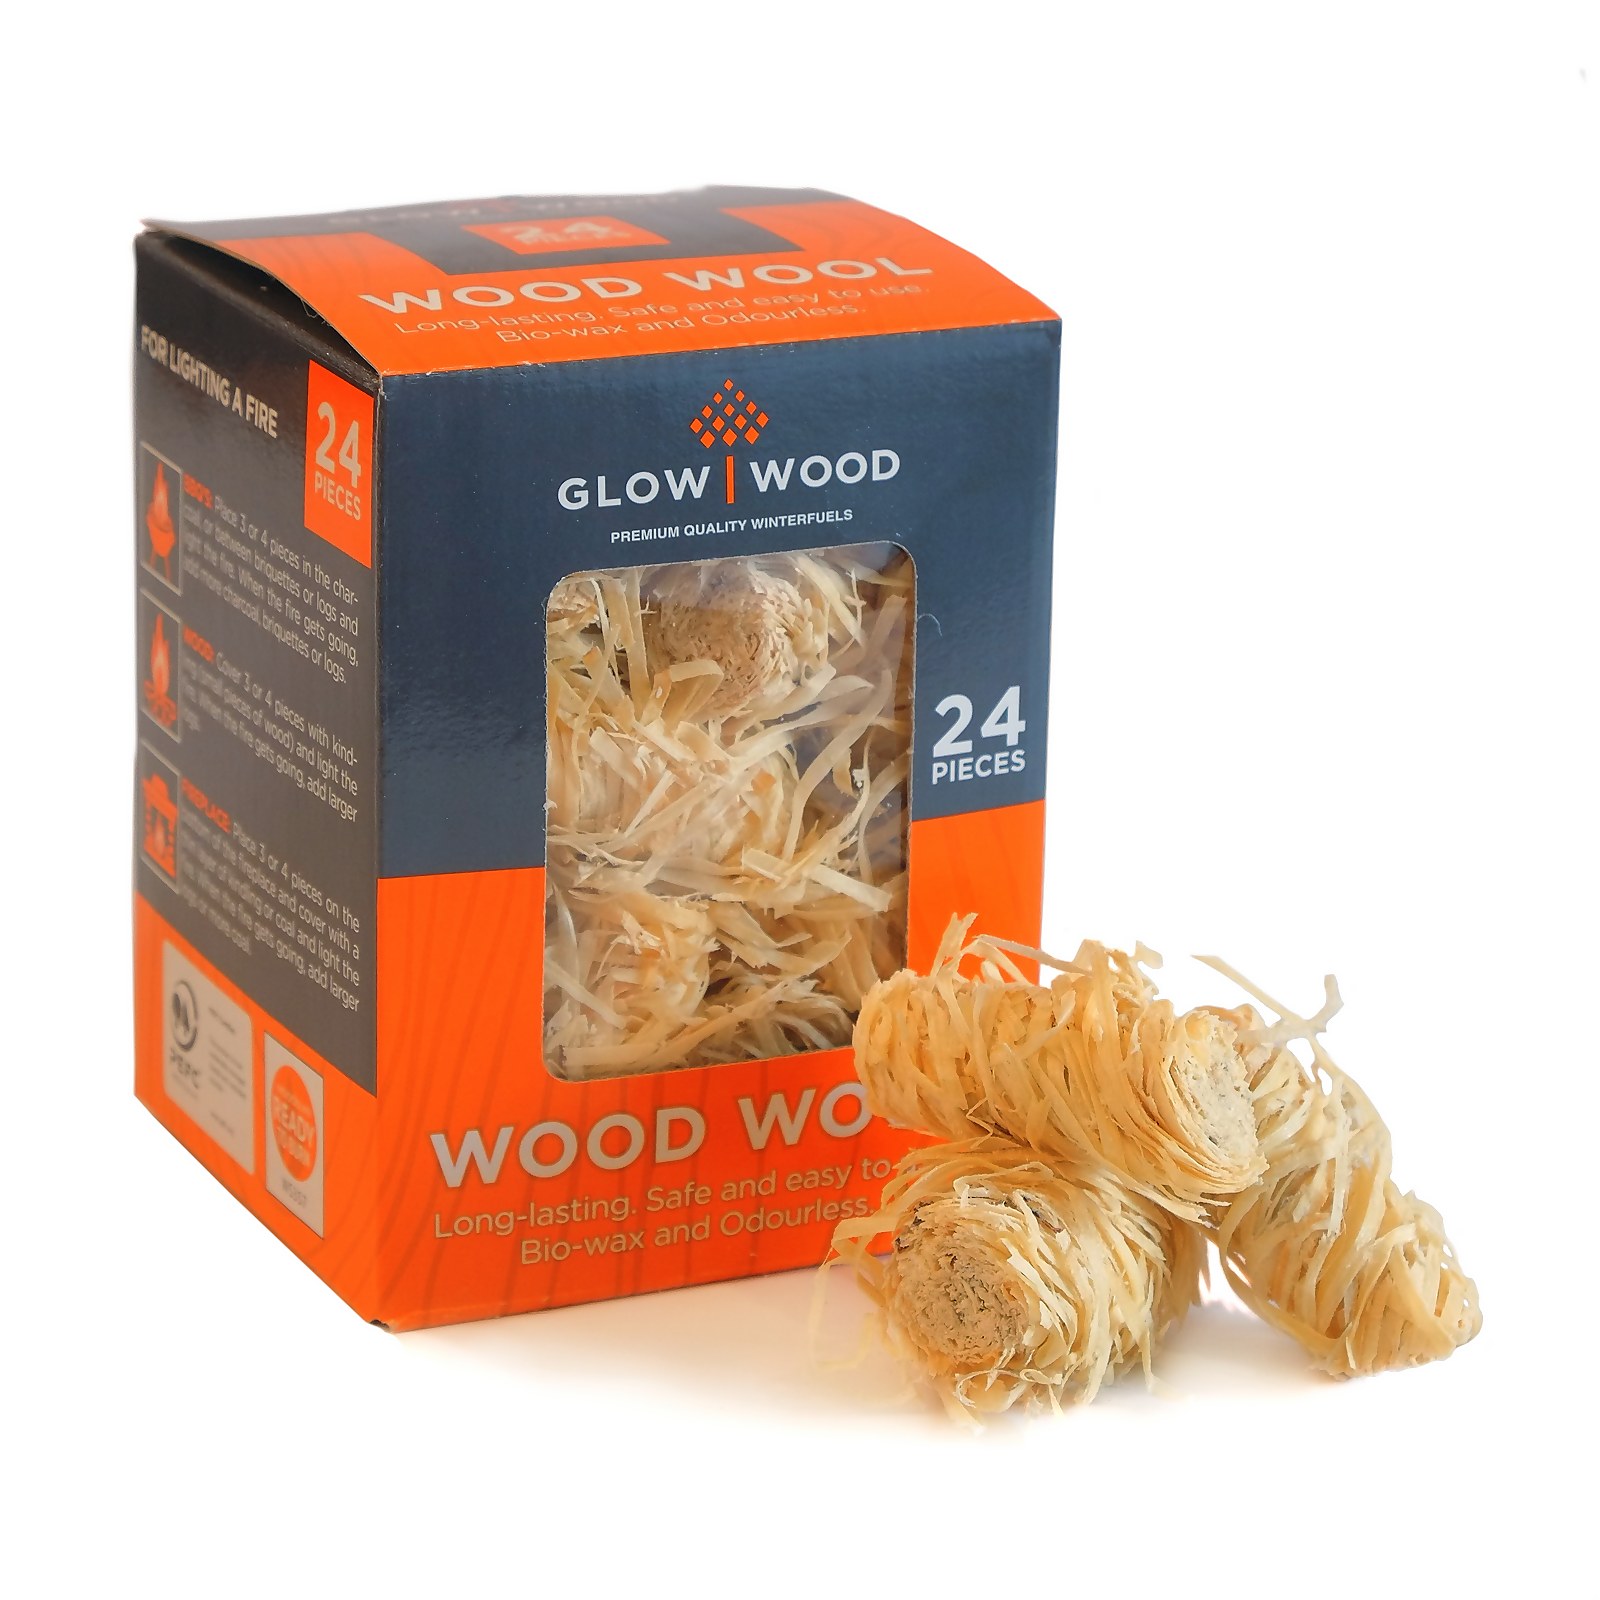 Photo of Glowwood Wood Wool Firelighter